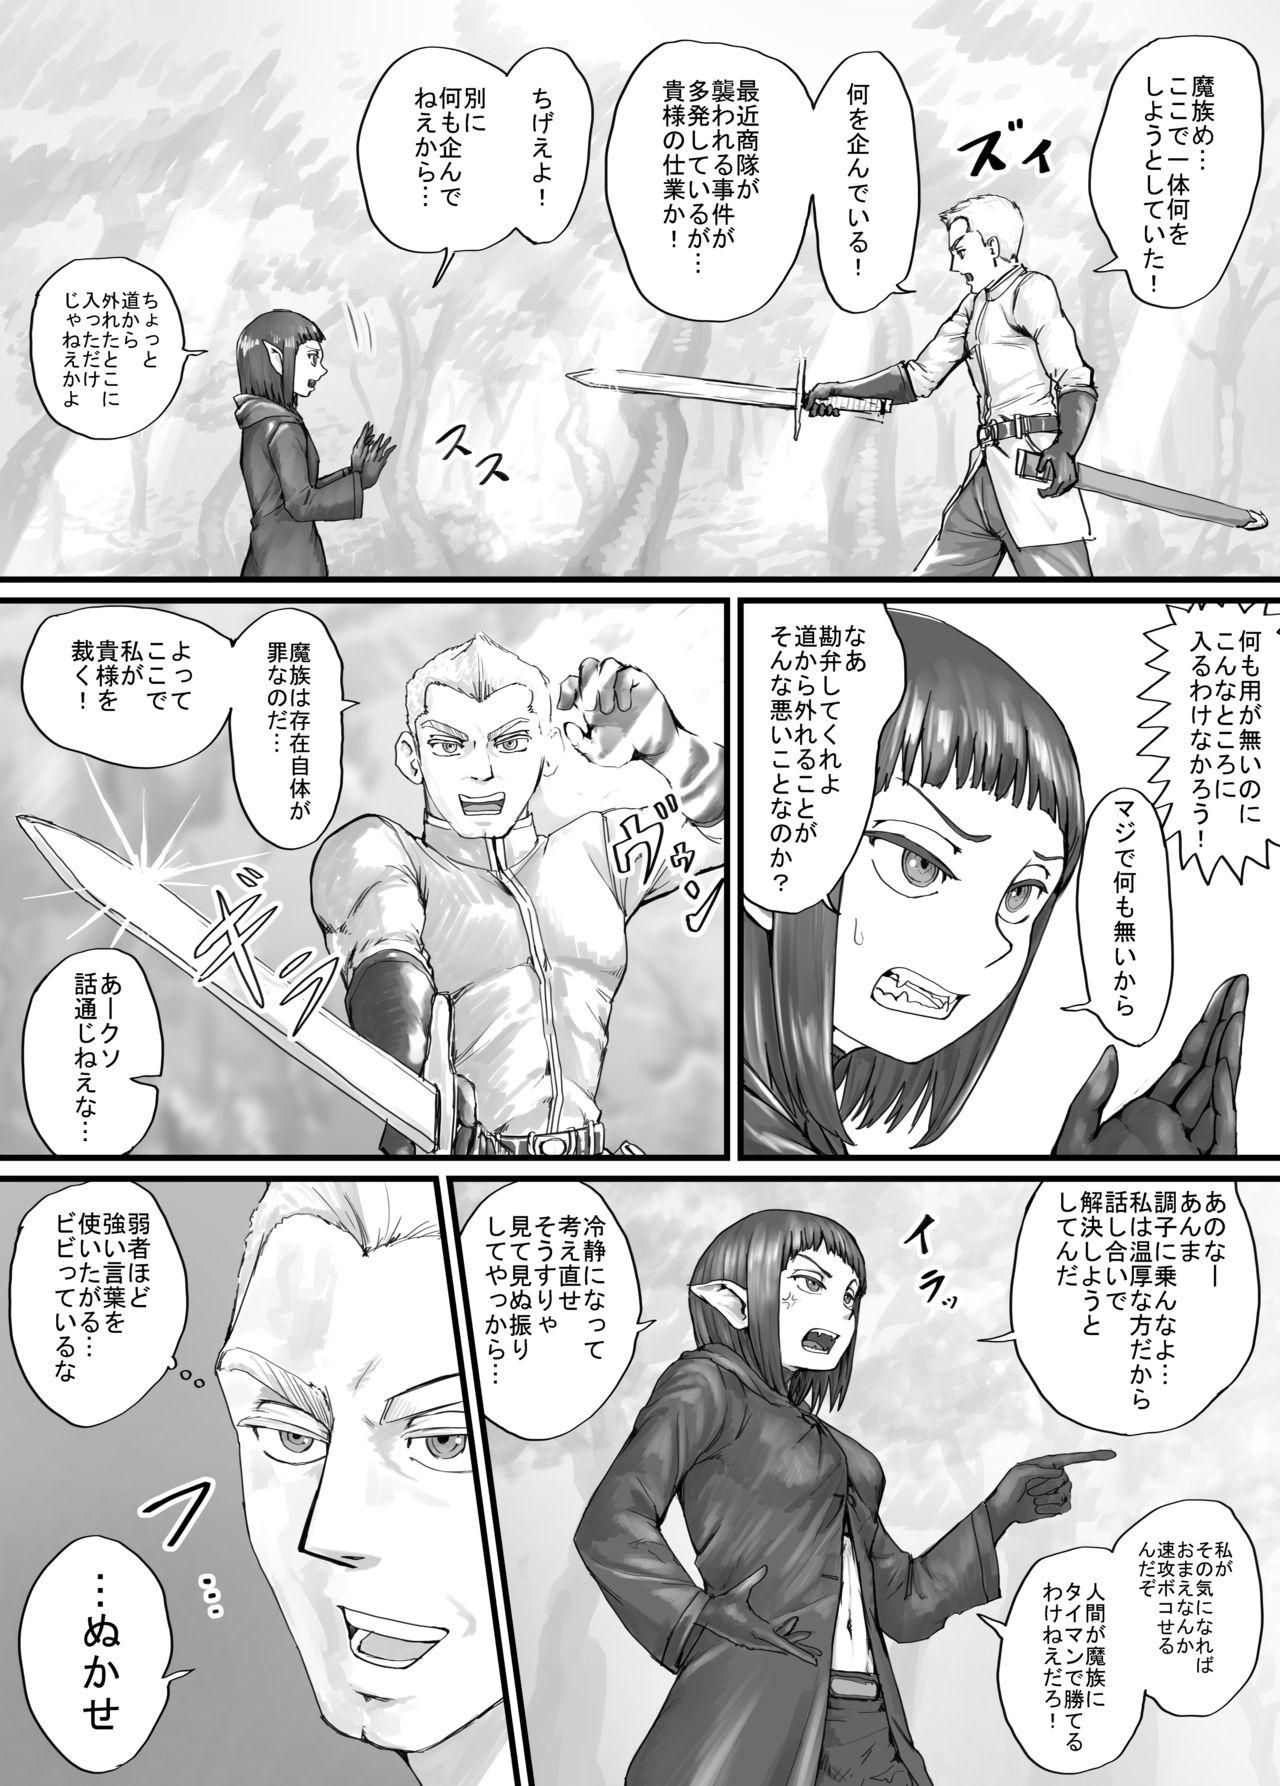 Stockings 魔族ちゃん漫画1 - Original Calcinha - Page 5